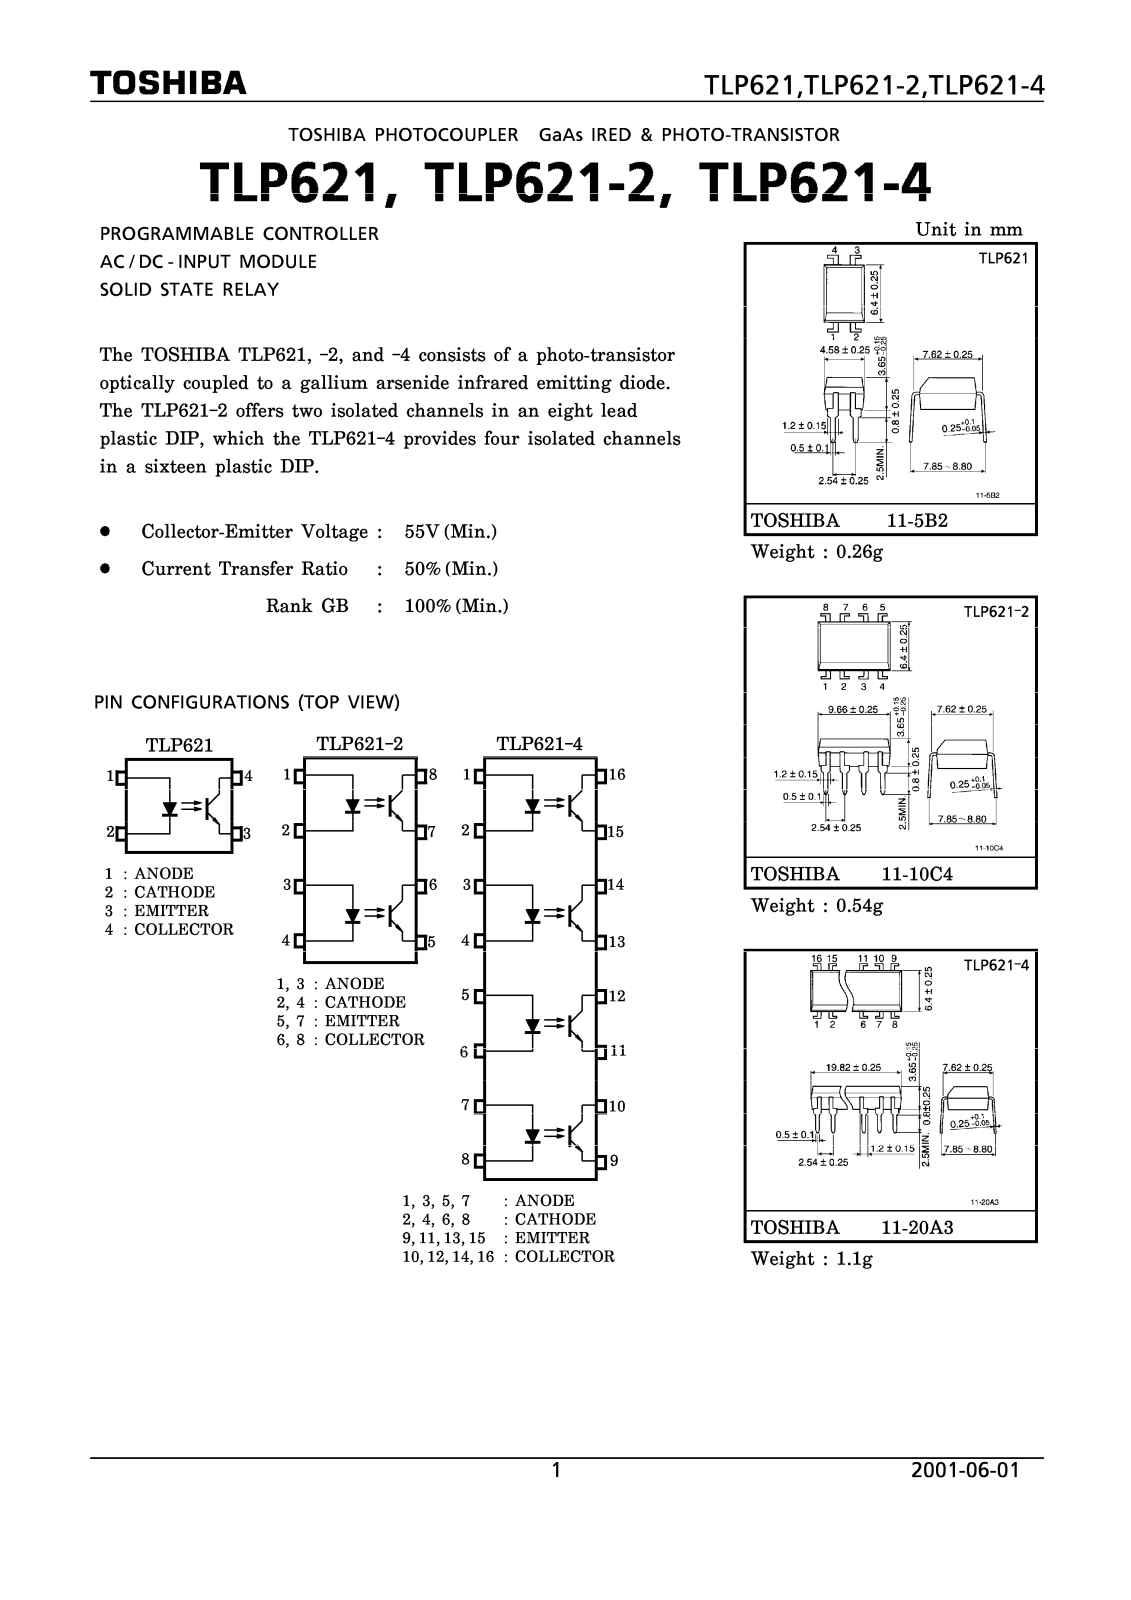 Toshiba TLP621, TLP621-2 Manual